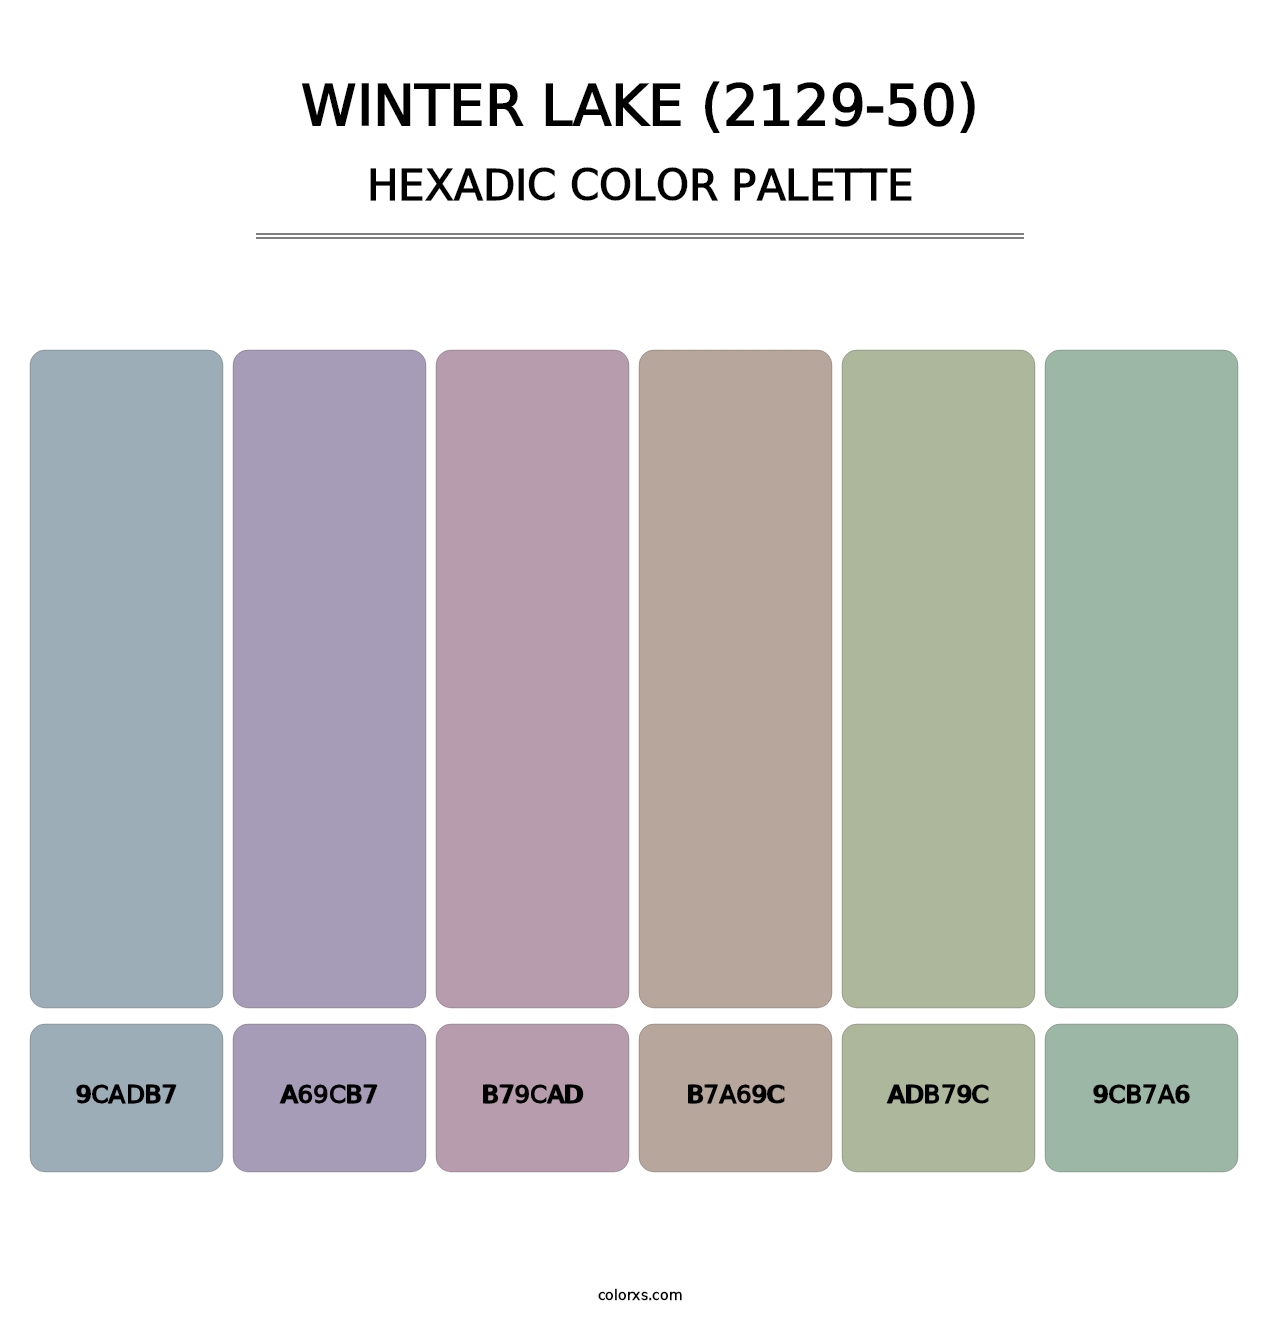 Winter Lake (2129-50) - Hexadic Color Palette